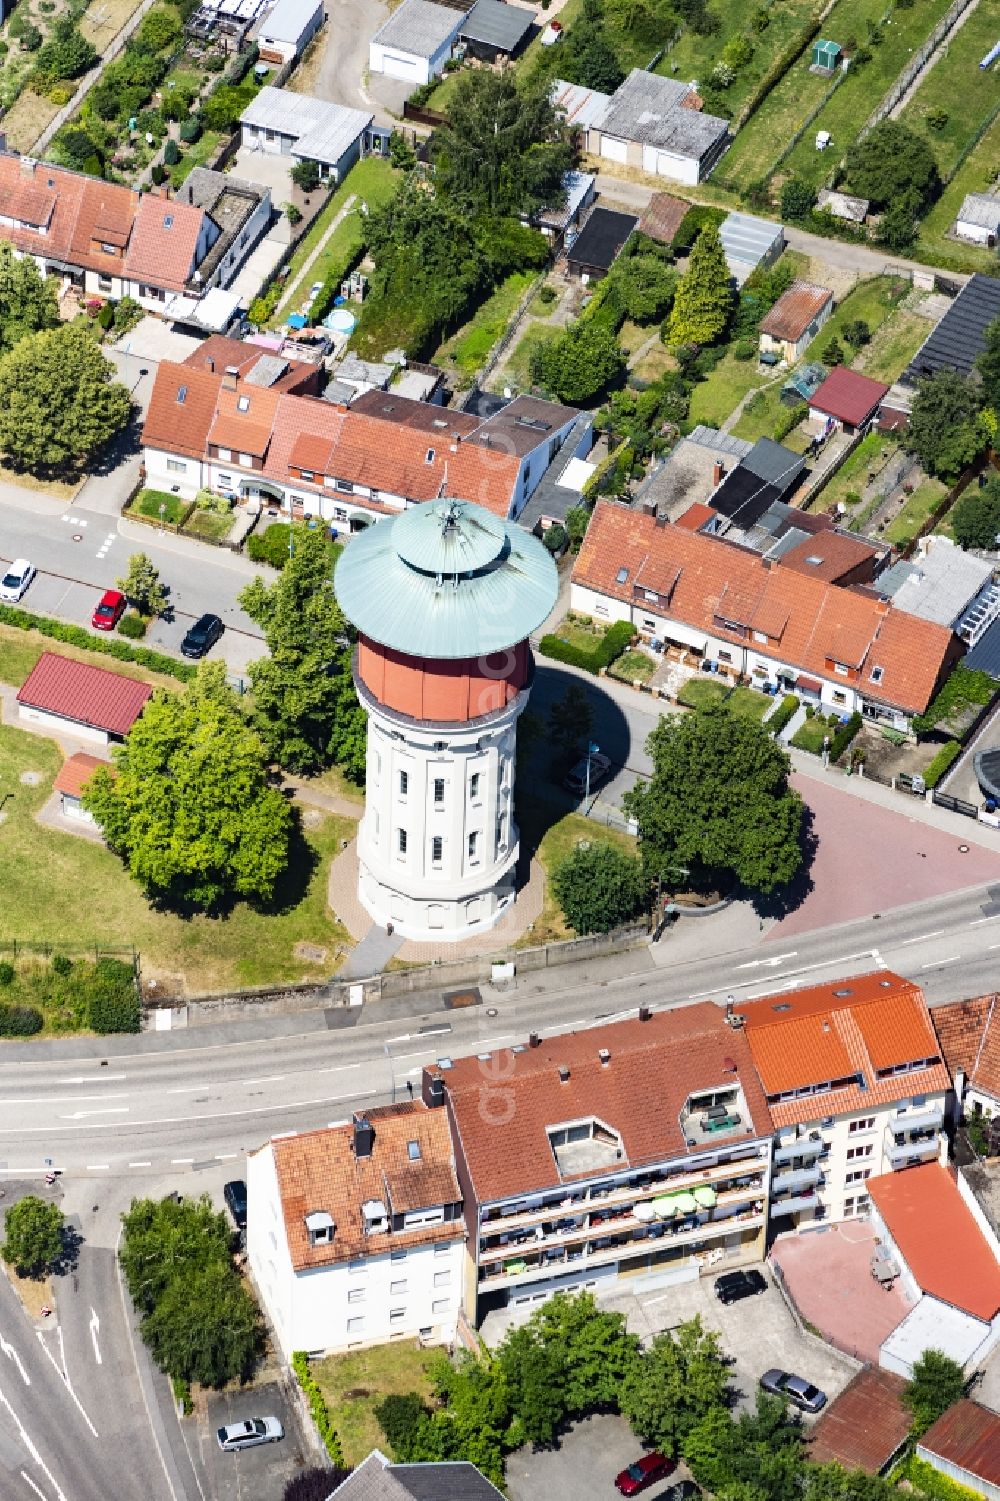 Aerial image Pirmasens - Building of industrial monument water tower Pirmasens in Pirmasens in the state Rhineland-Palatinate, Germany